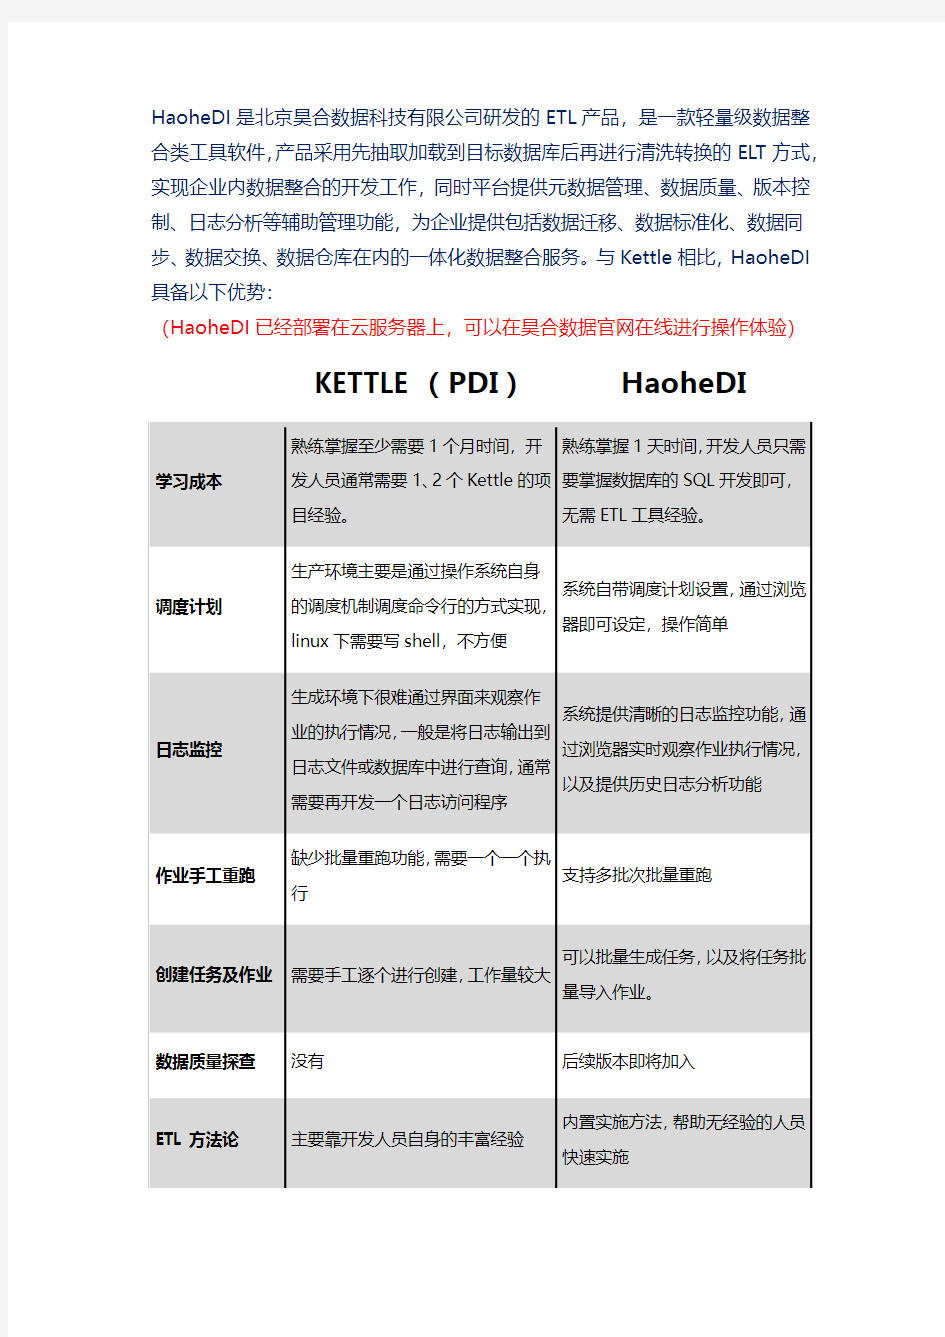 ETL选型策略及参考：Kettle与HaoheDI对比